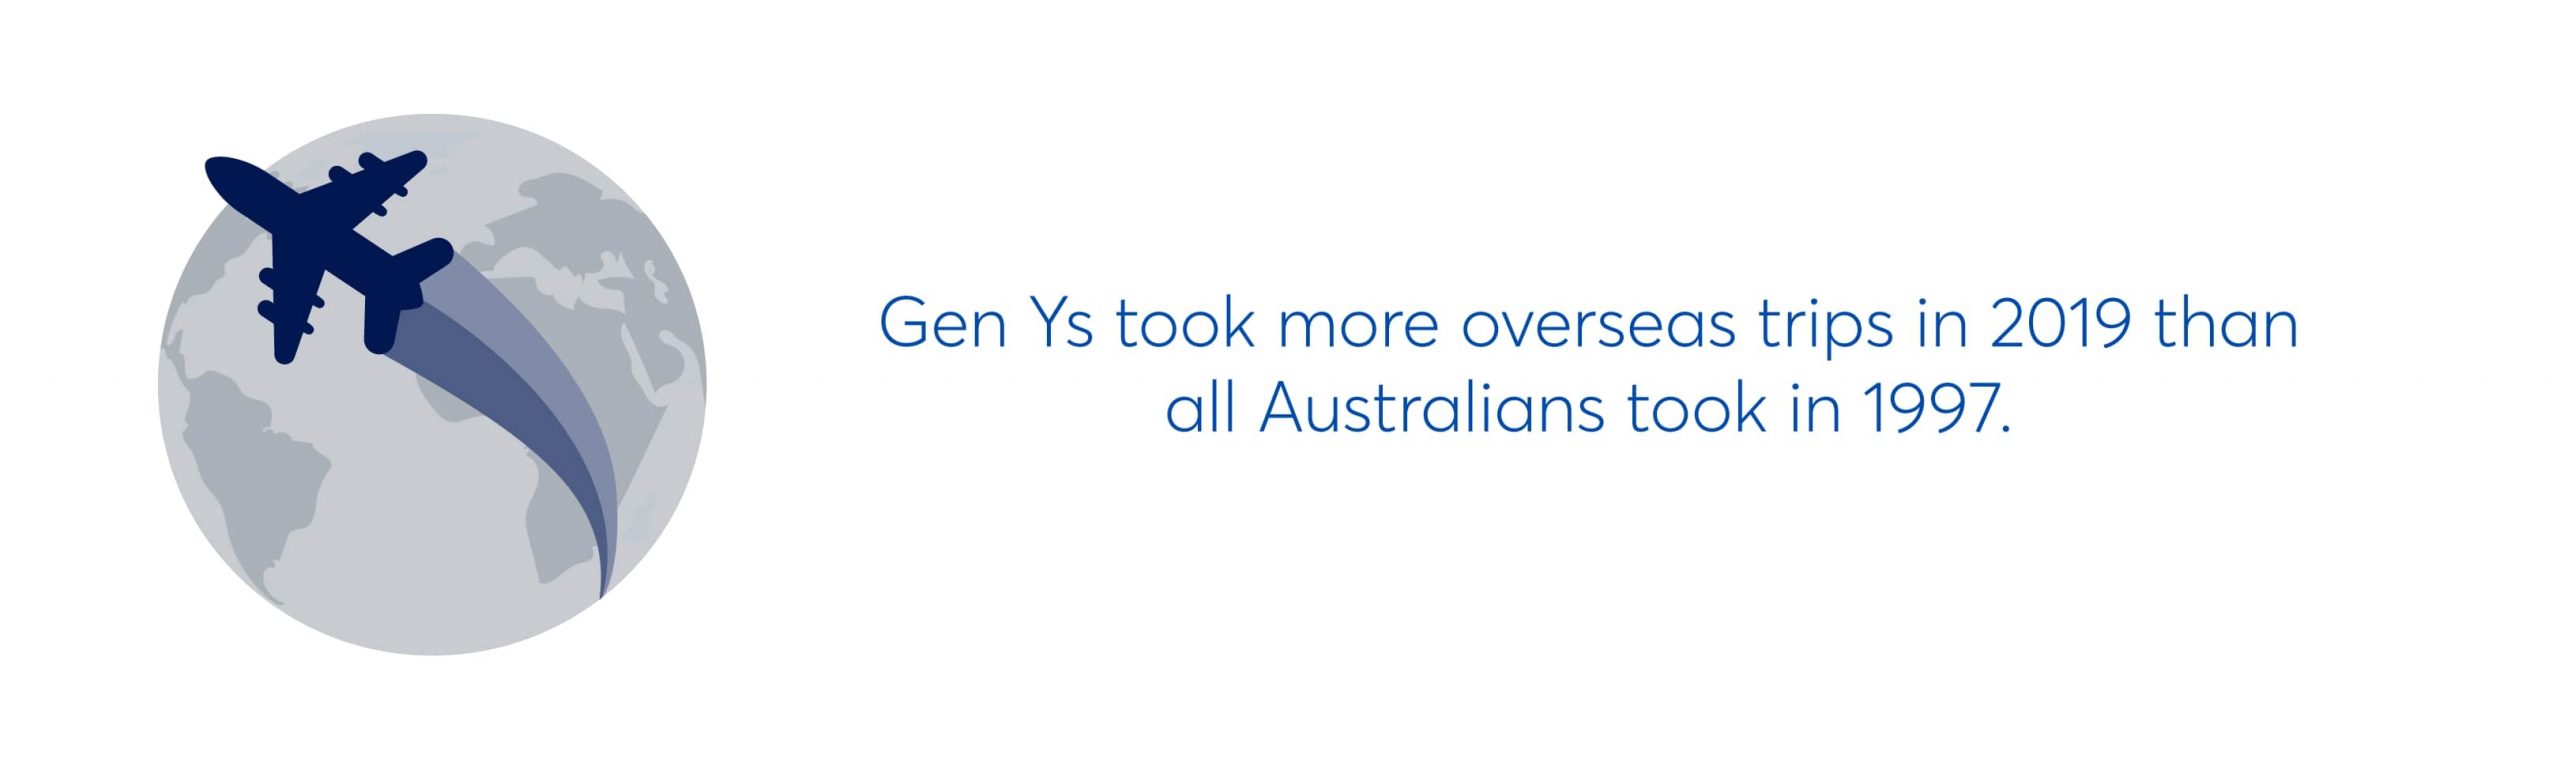 gen ys took more overseas trips in 2019 than all australians took in 1997.